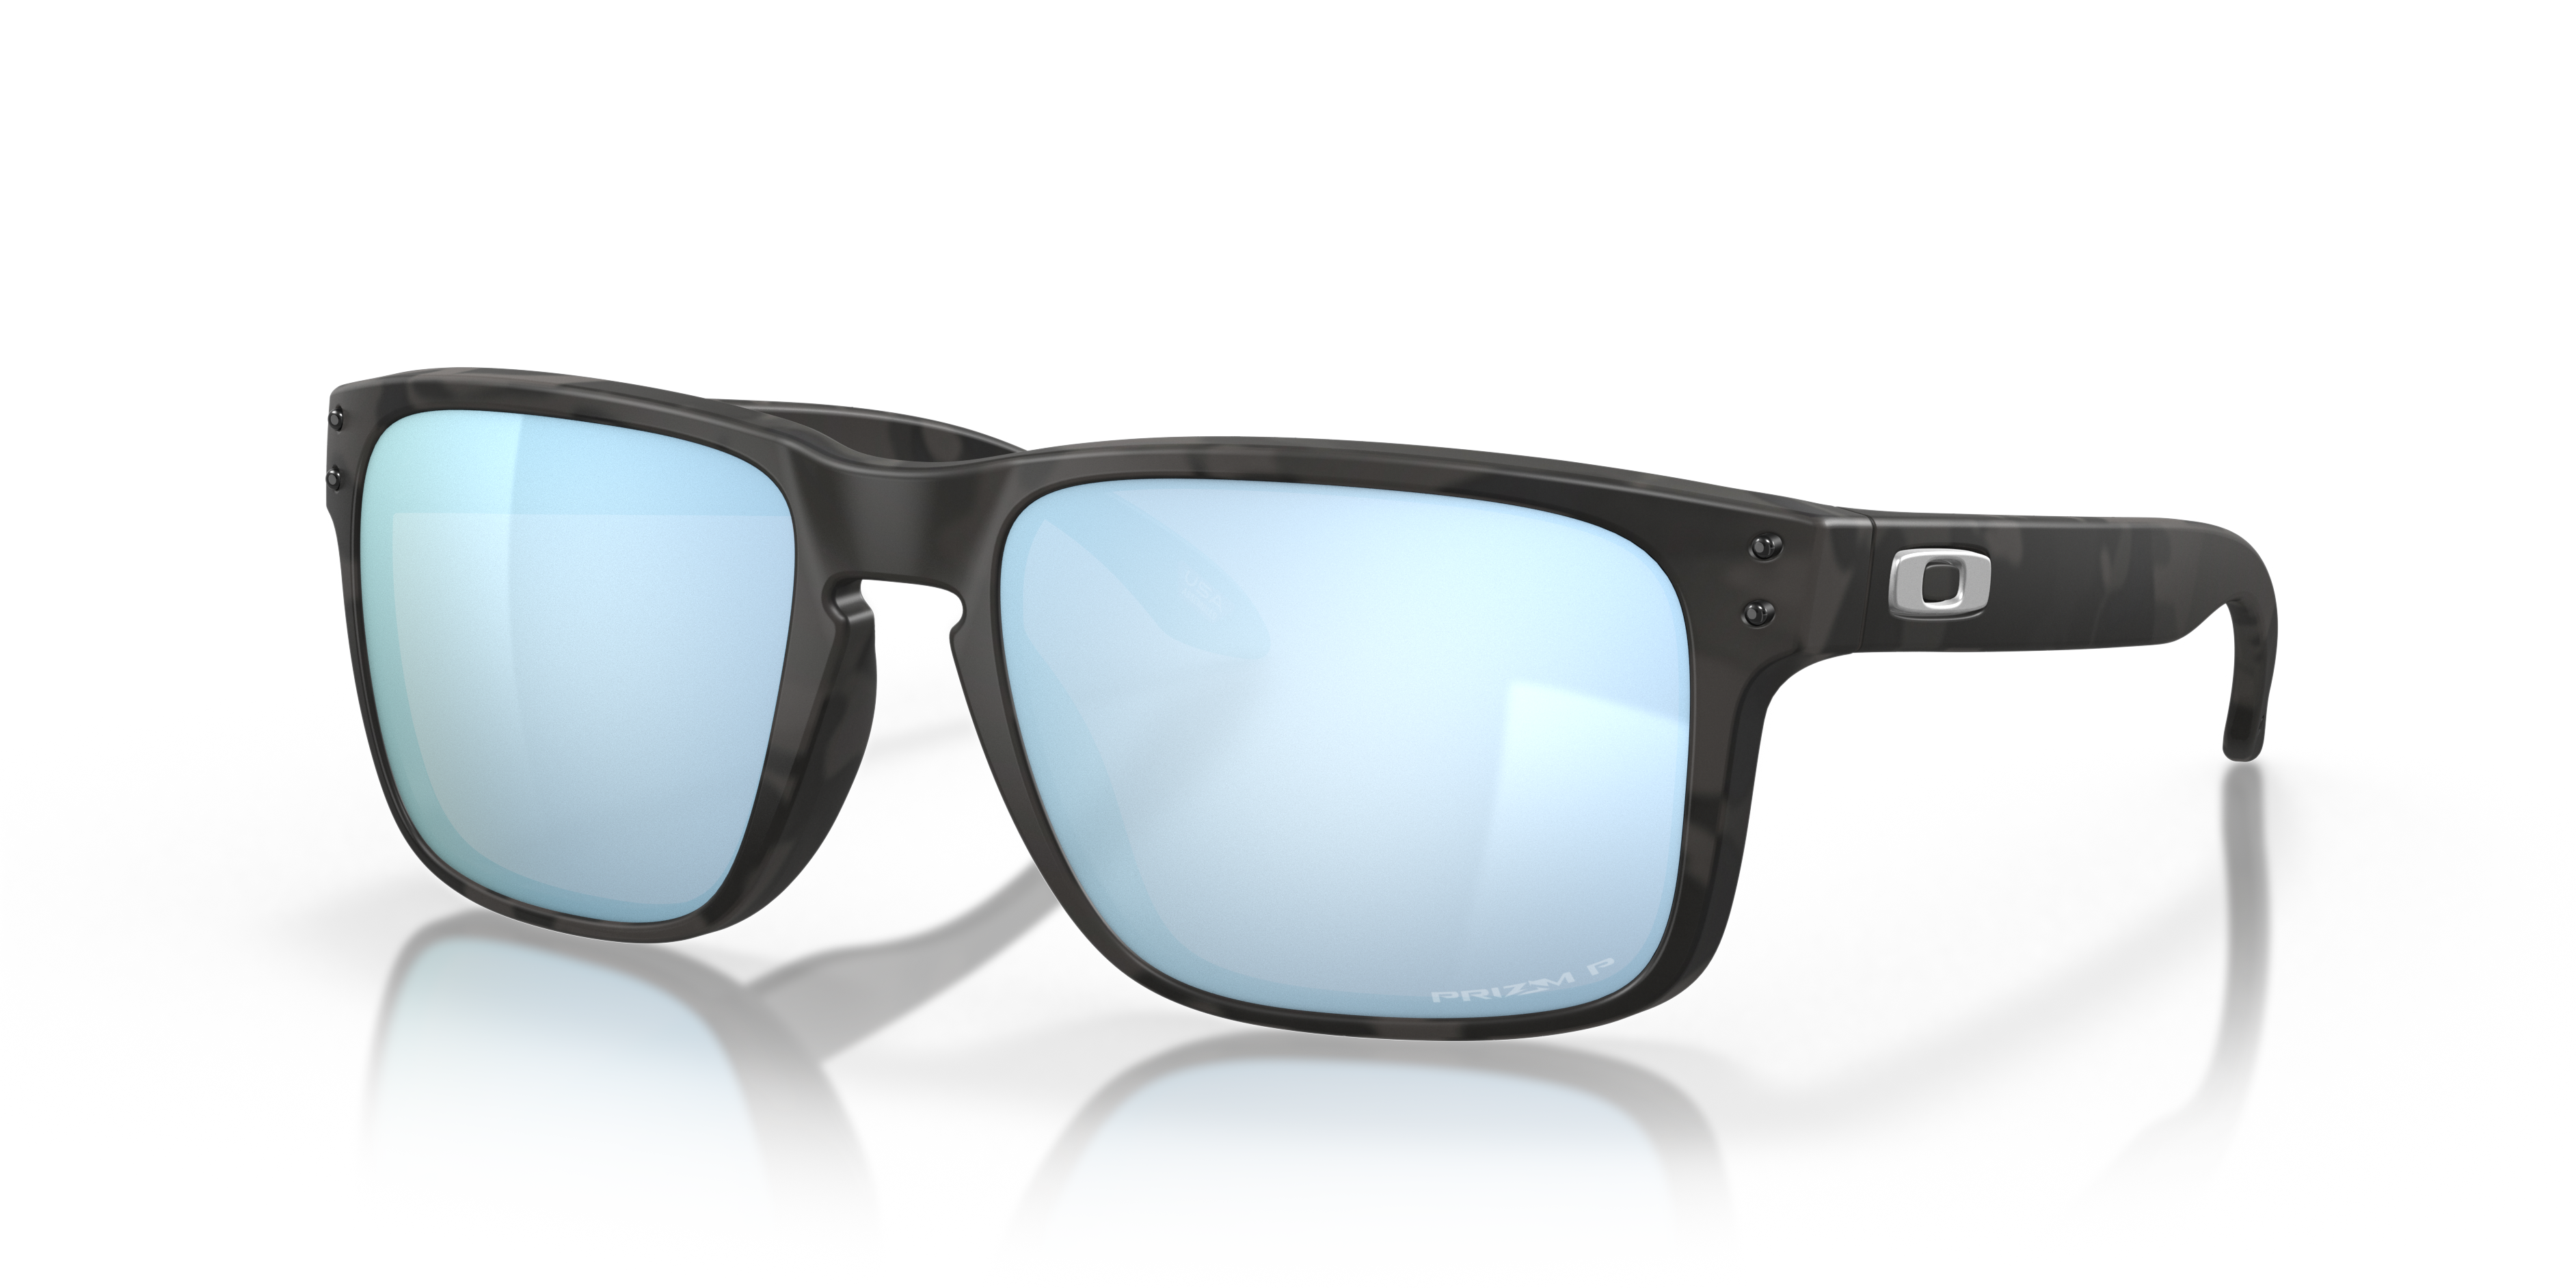 Oakley Holbrook™ Sunglasses In Black